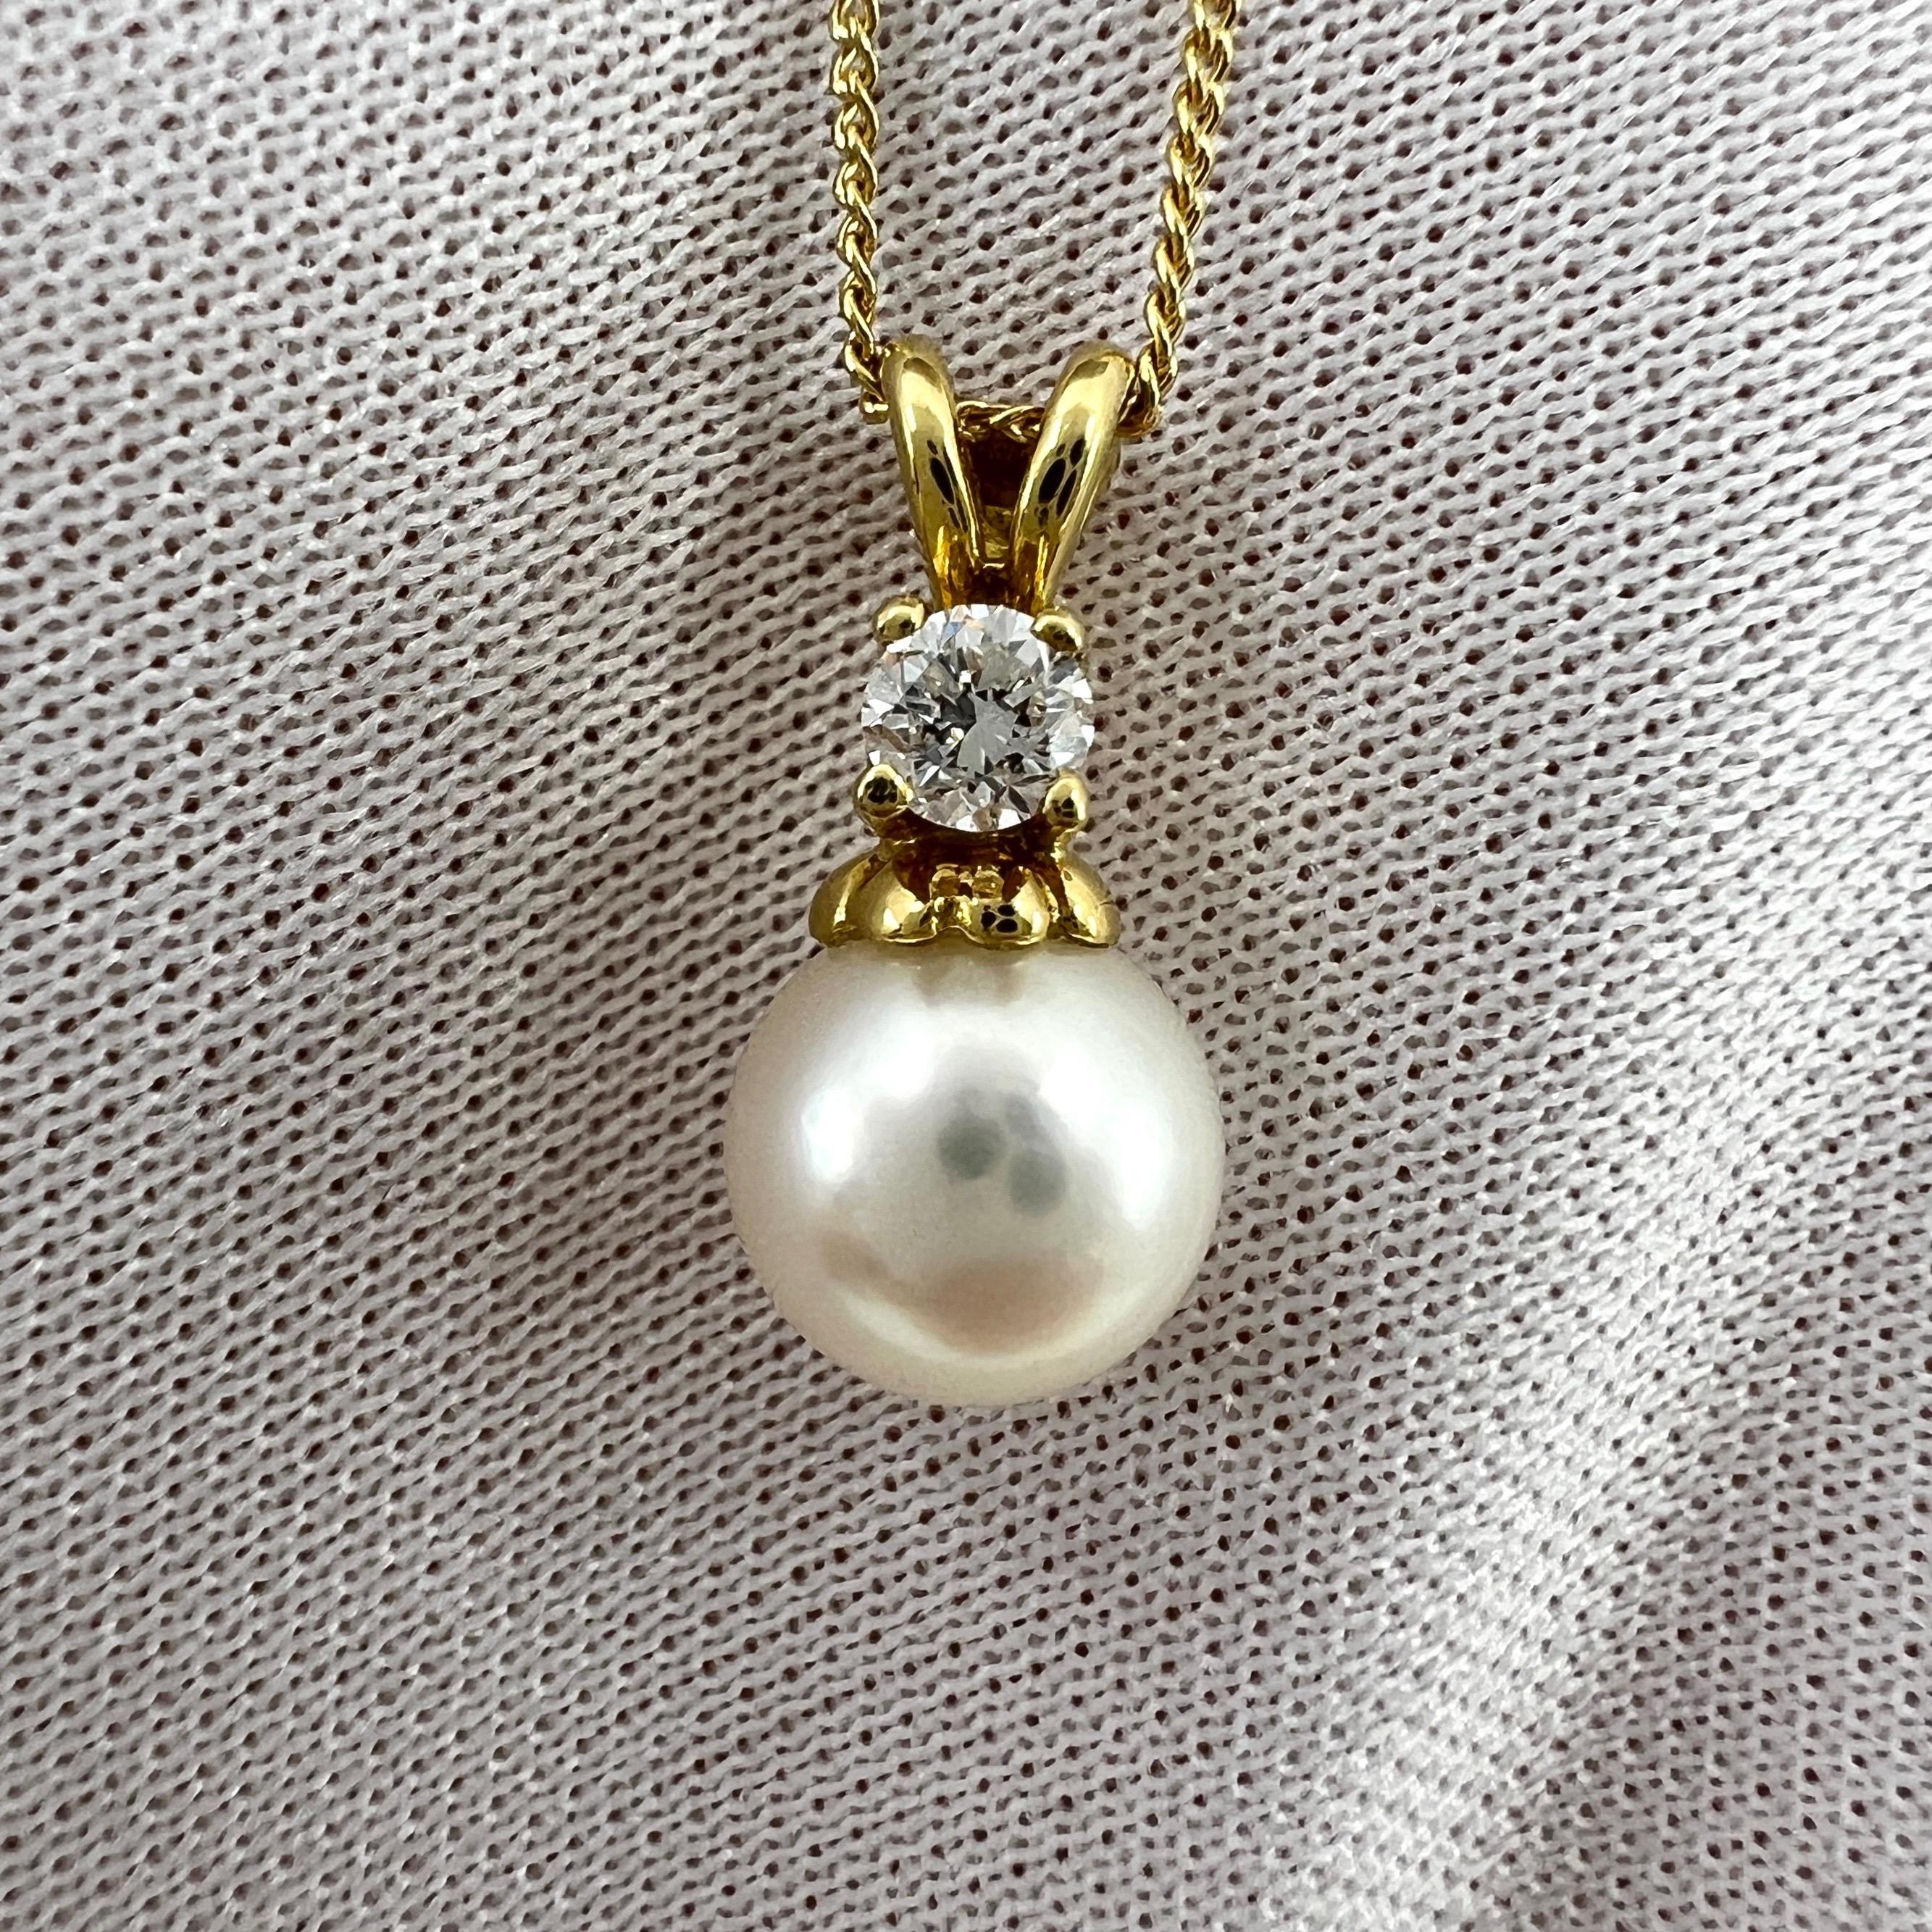 Rare Tiffany & Co. White Pearl And Diamond 18k Yellow Gold Pendant Necklace 1